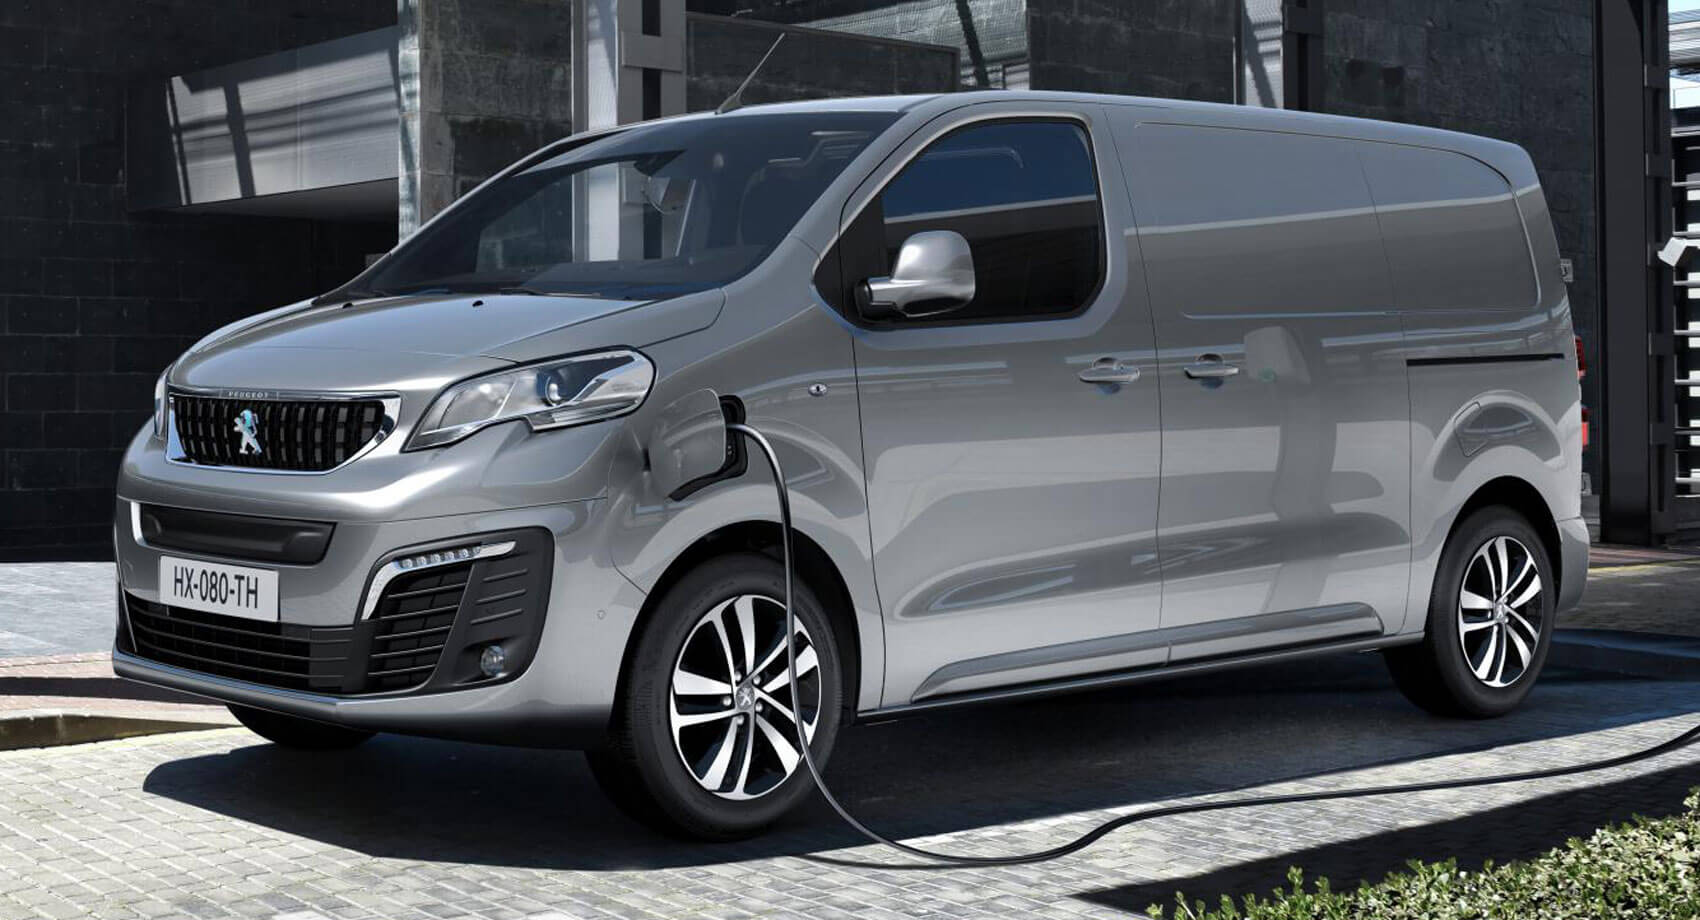 2021 Peugeot e-Expert Electric Van Has 